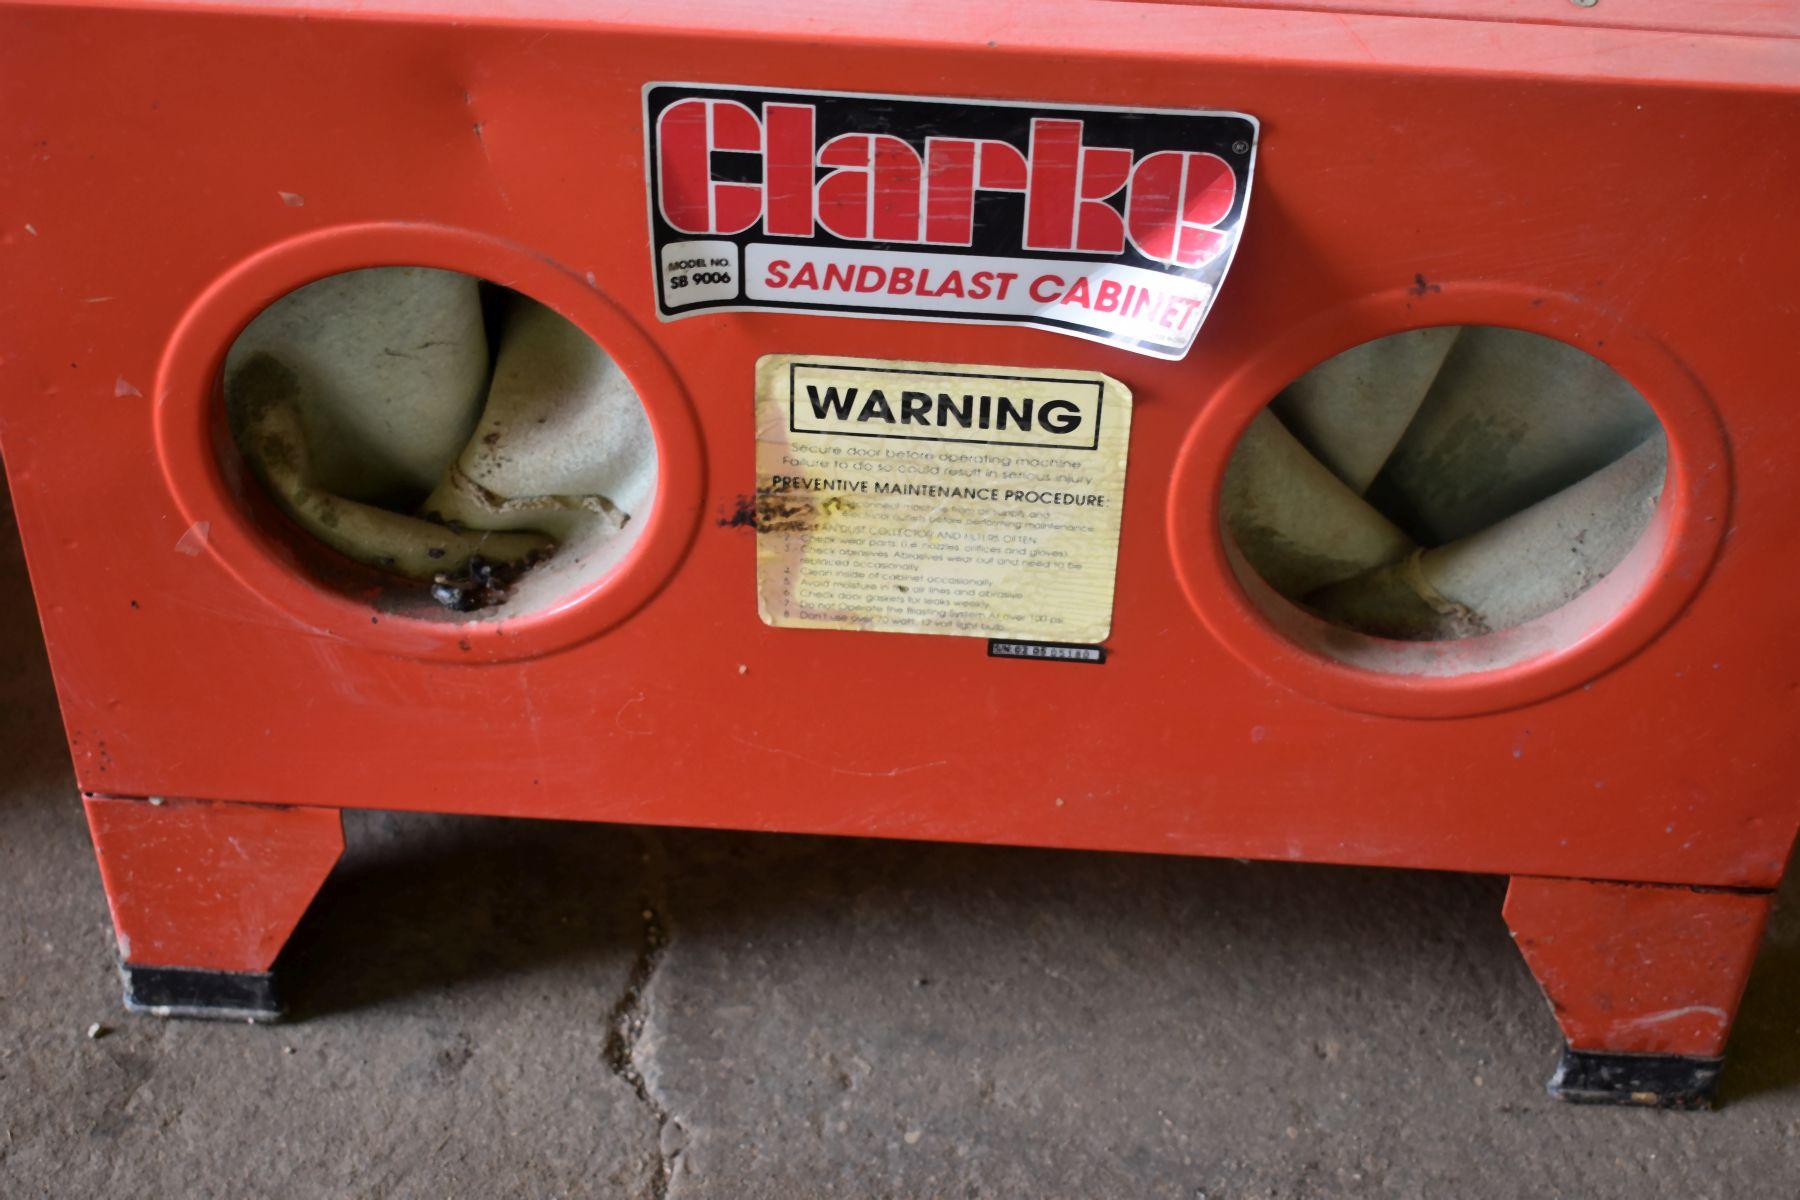 Clark Sand Blasting Cabinet Bench Top, Model SB9006